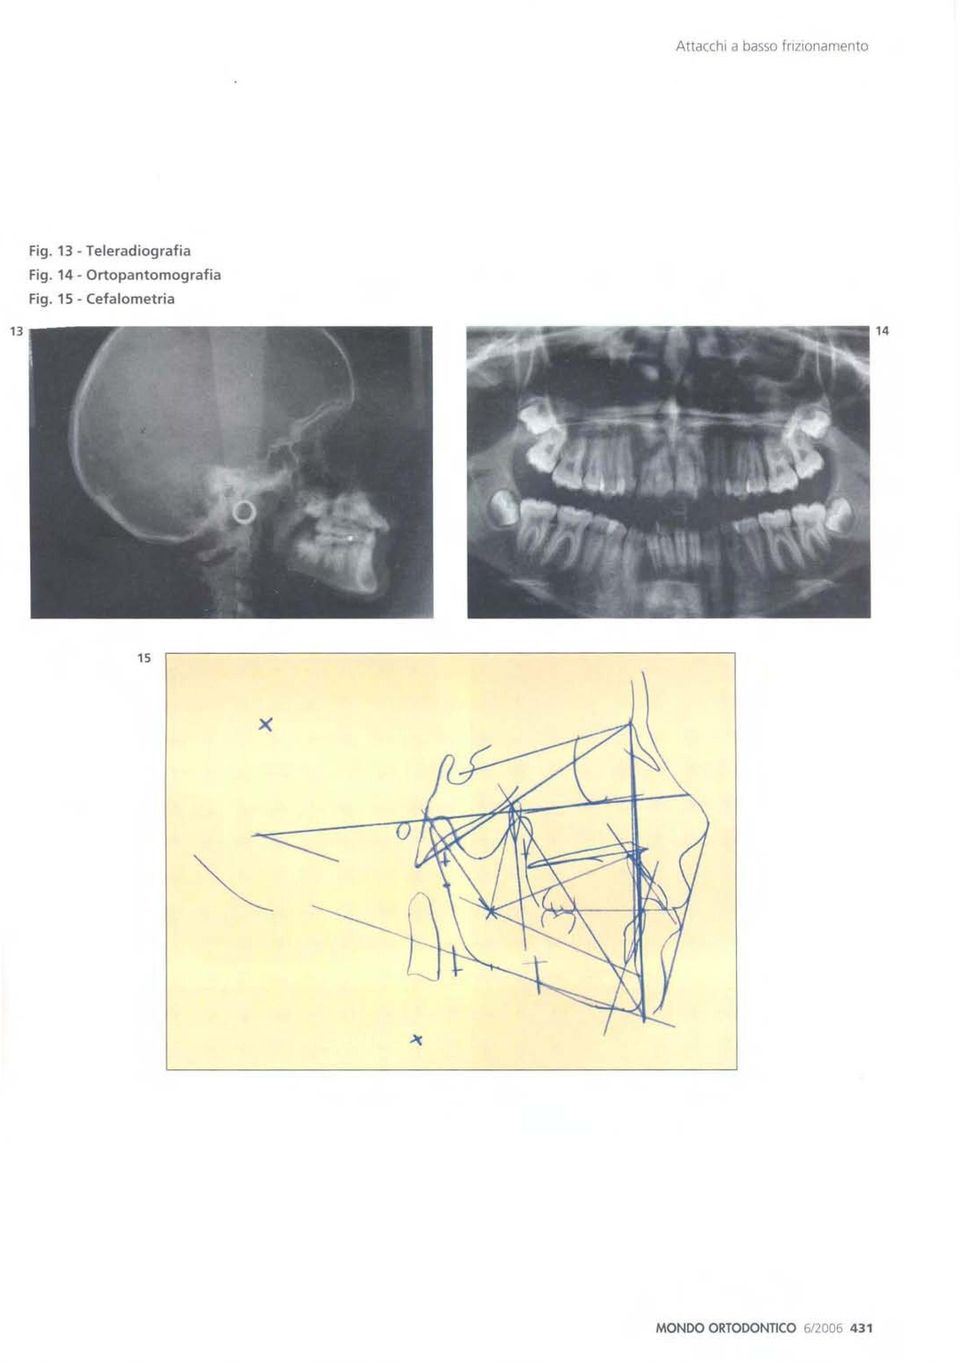 14 - Ortopantomografia Fig.